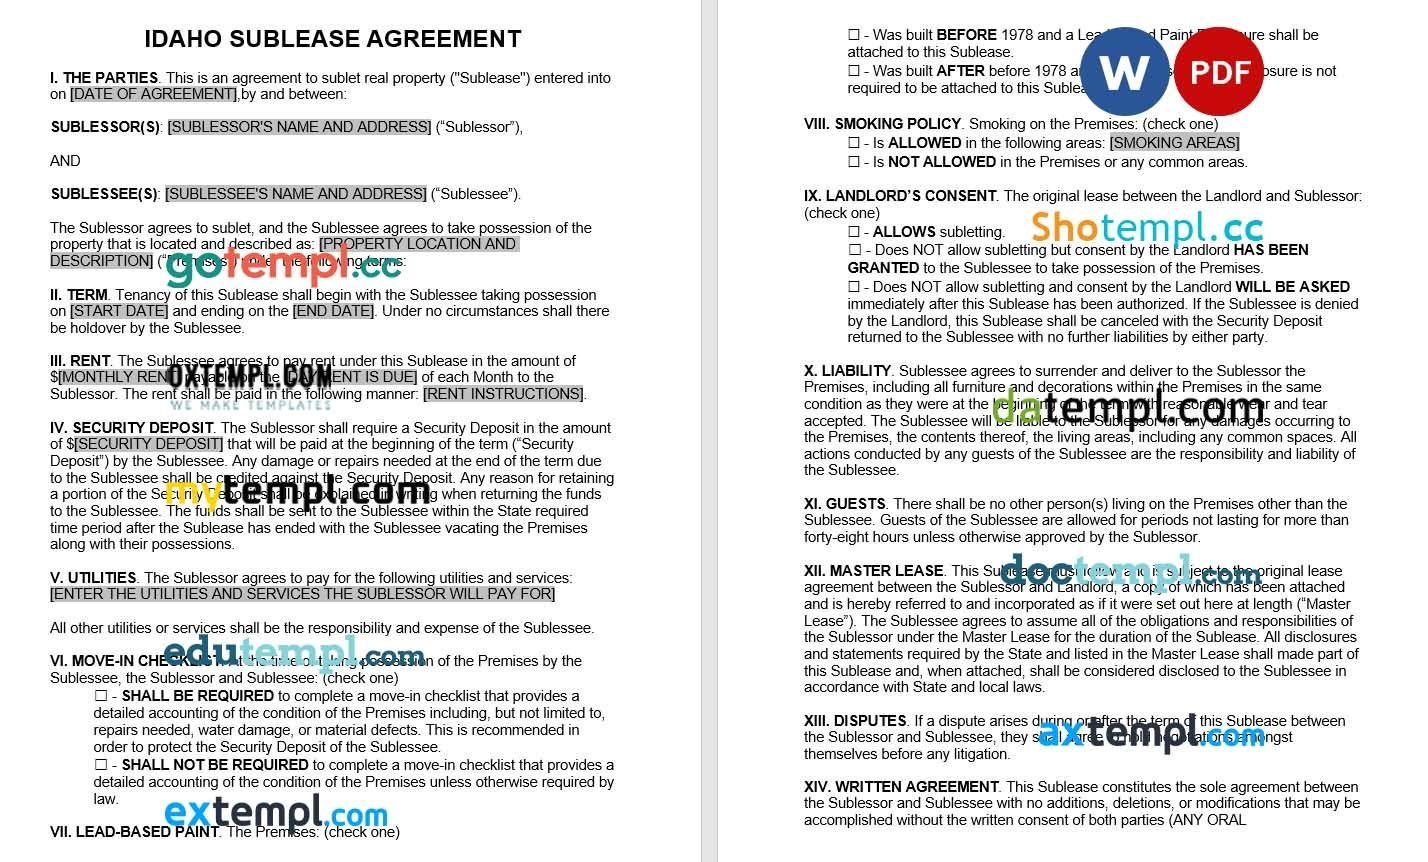 Idaho Sublease Agreement Word example, fully editable